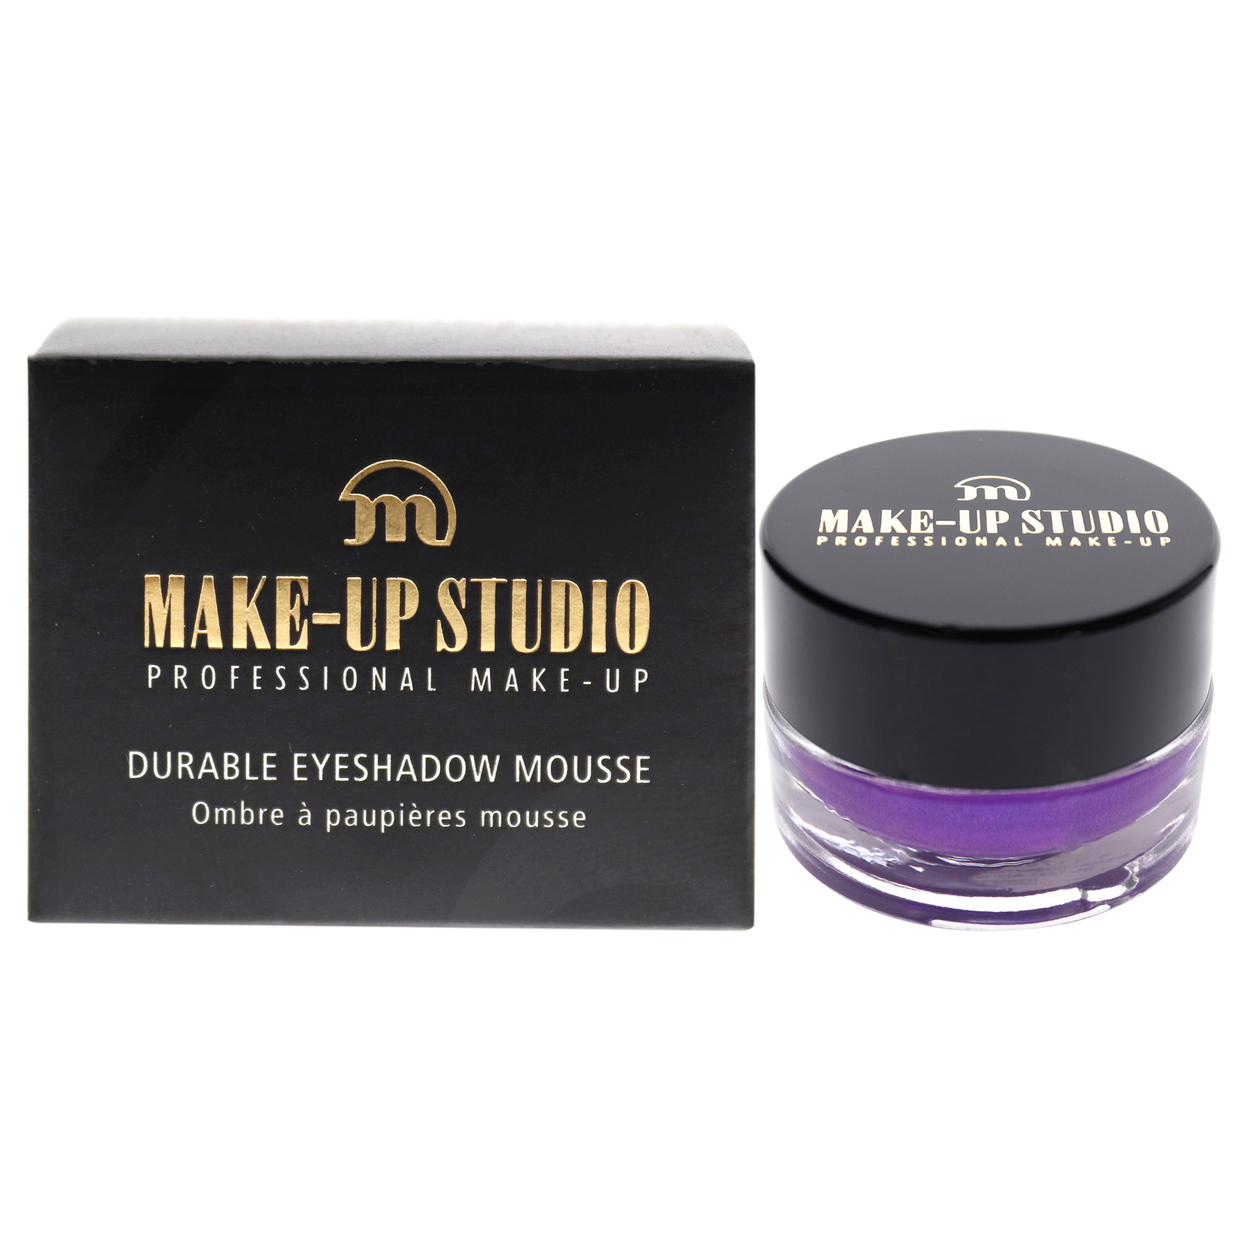 Make-Up Studio Durable Eyeshadow Mousse - Violet Vanity Eye Shadow 0.17 Oz